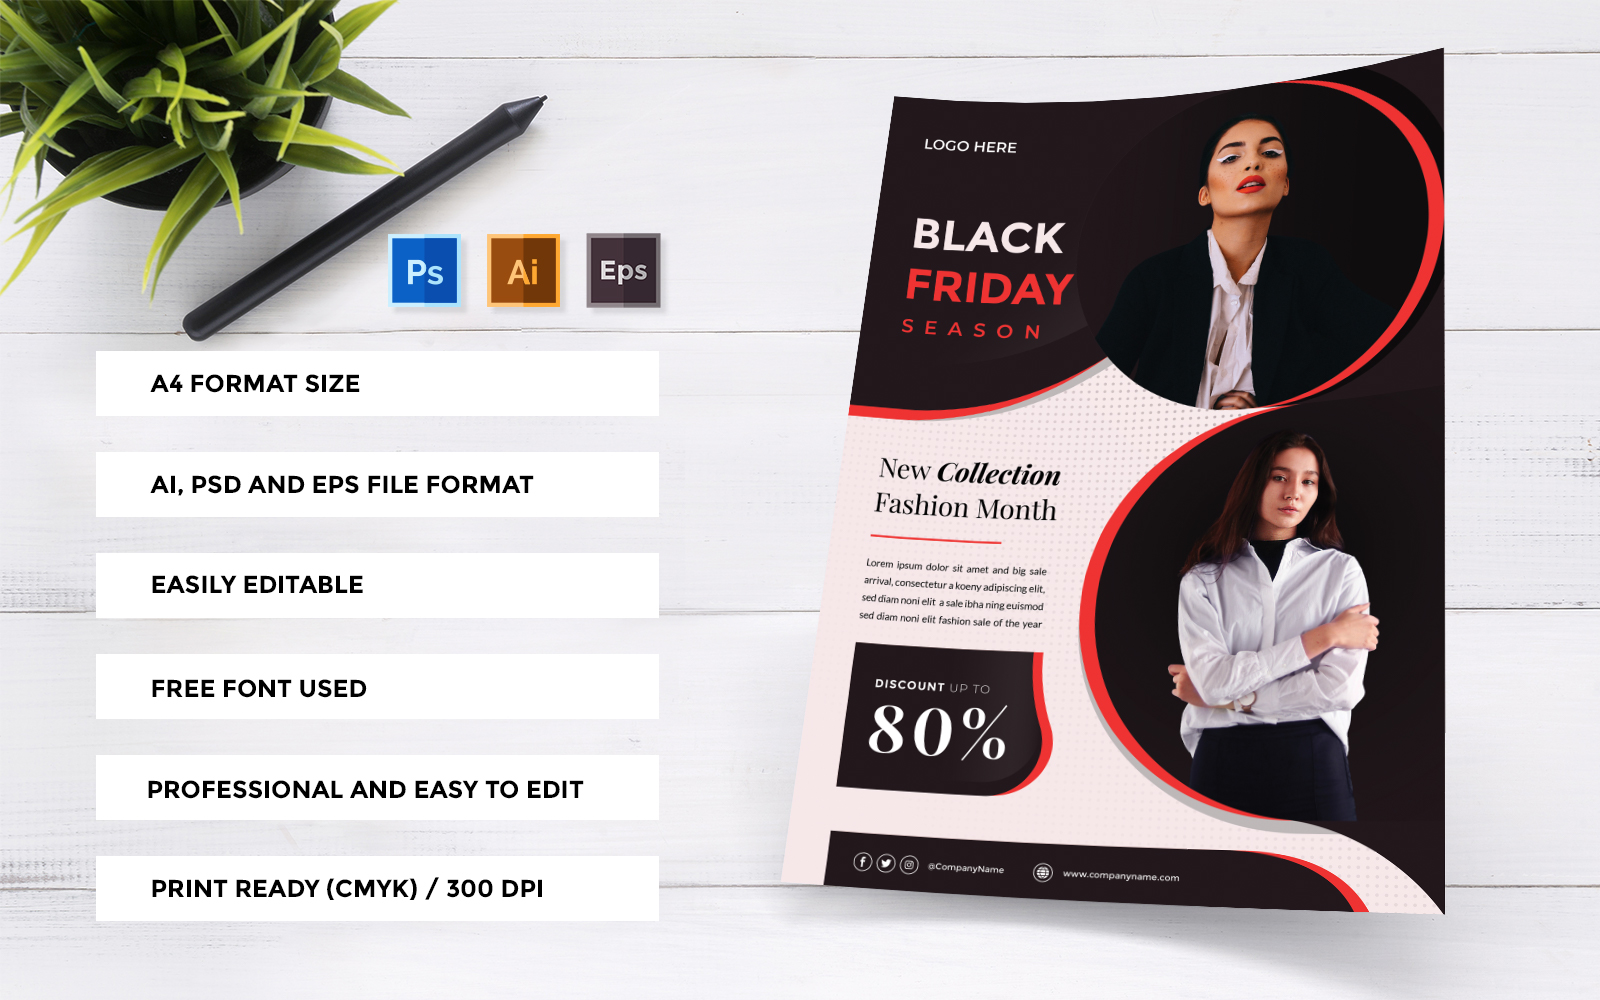 Black Friday Season - Multipurpose Flyer - Corporate Identity Template